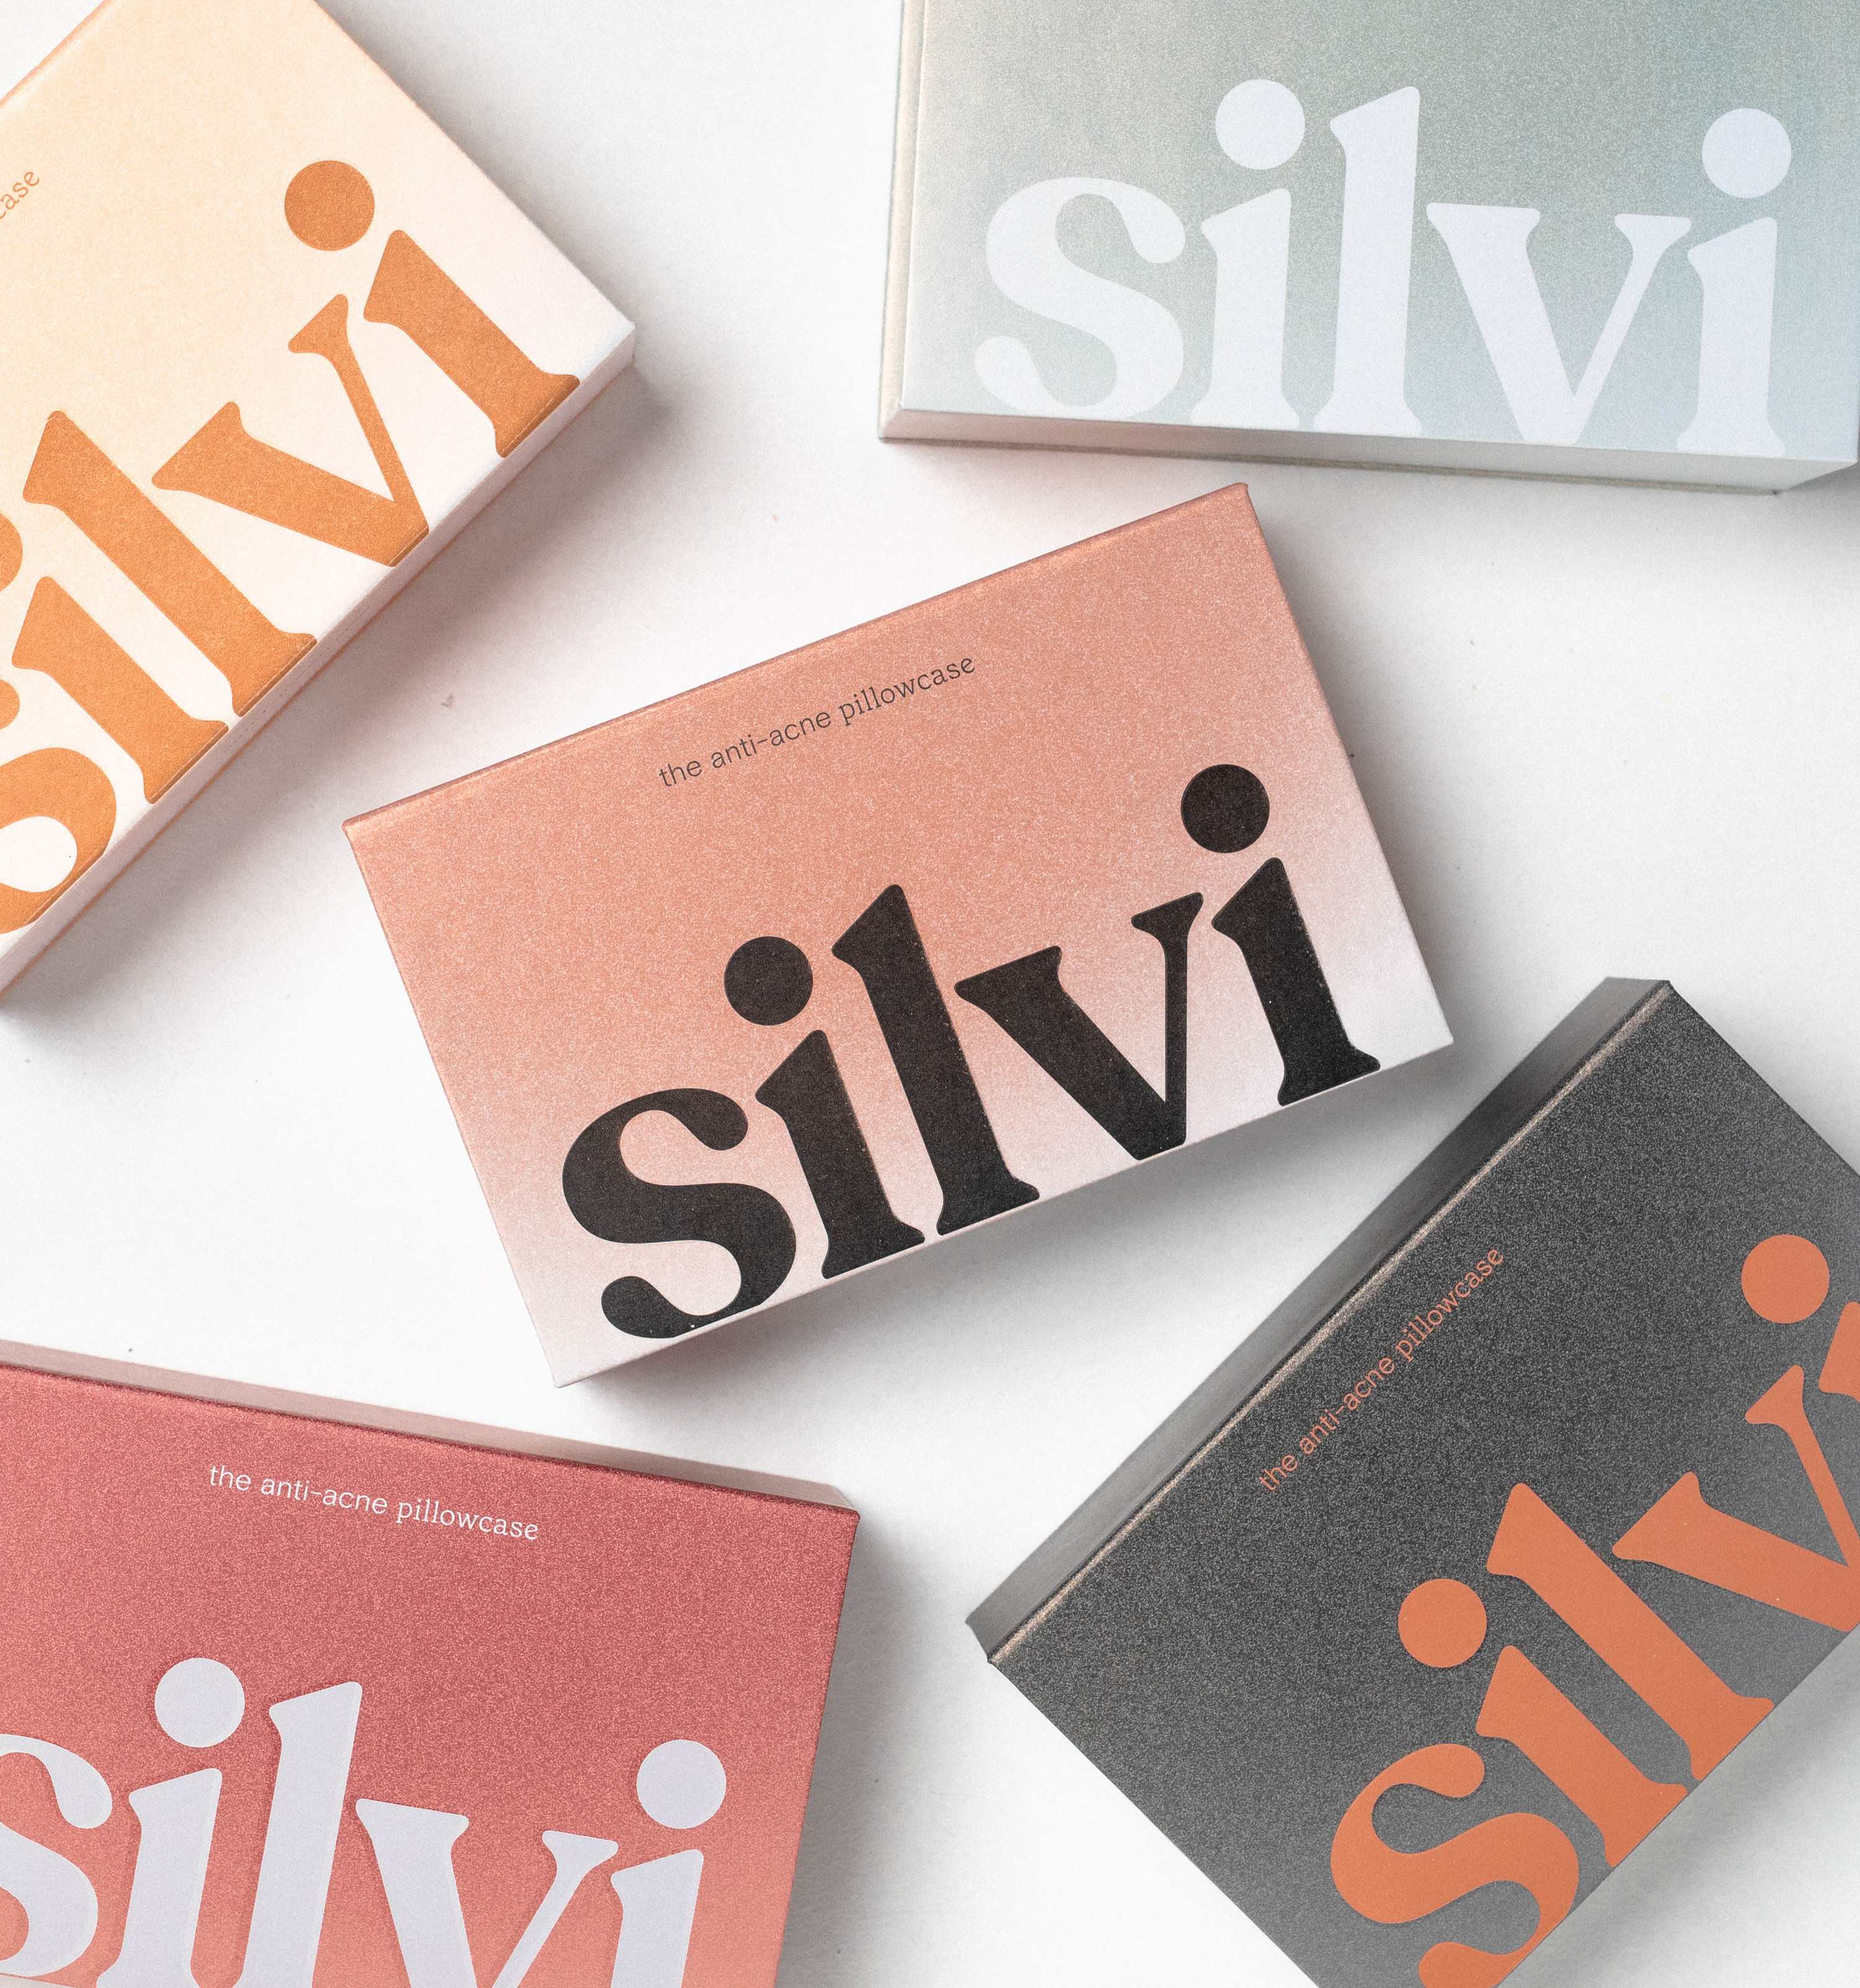 Several boxes of the Silvi anti-acne pillowcase